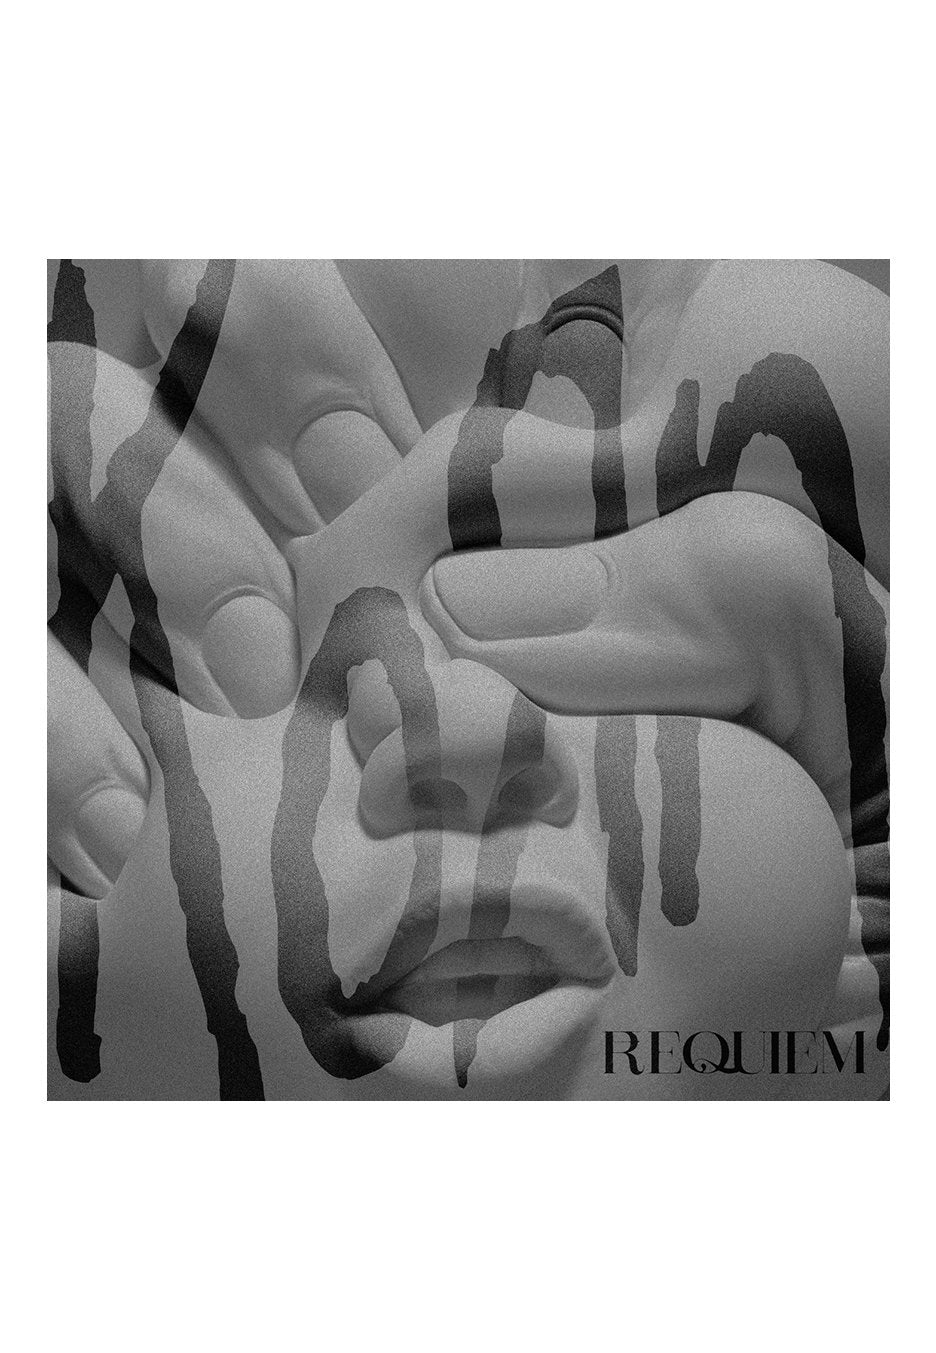 Korn - Requiem - CD